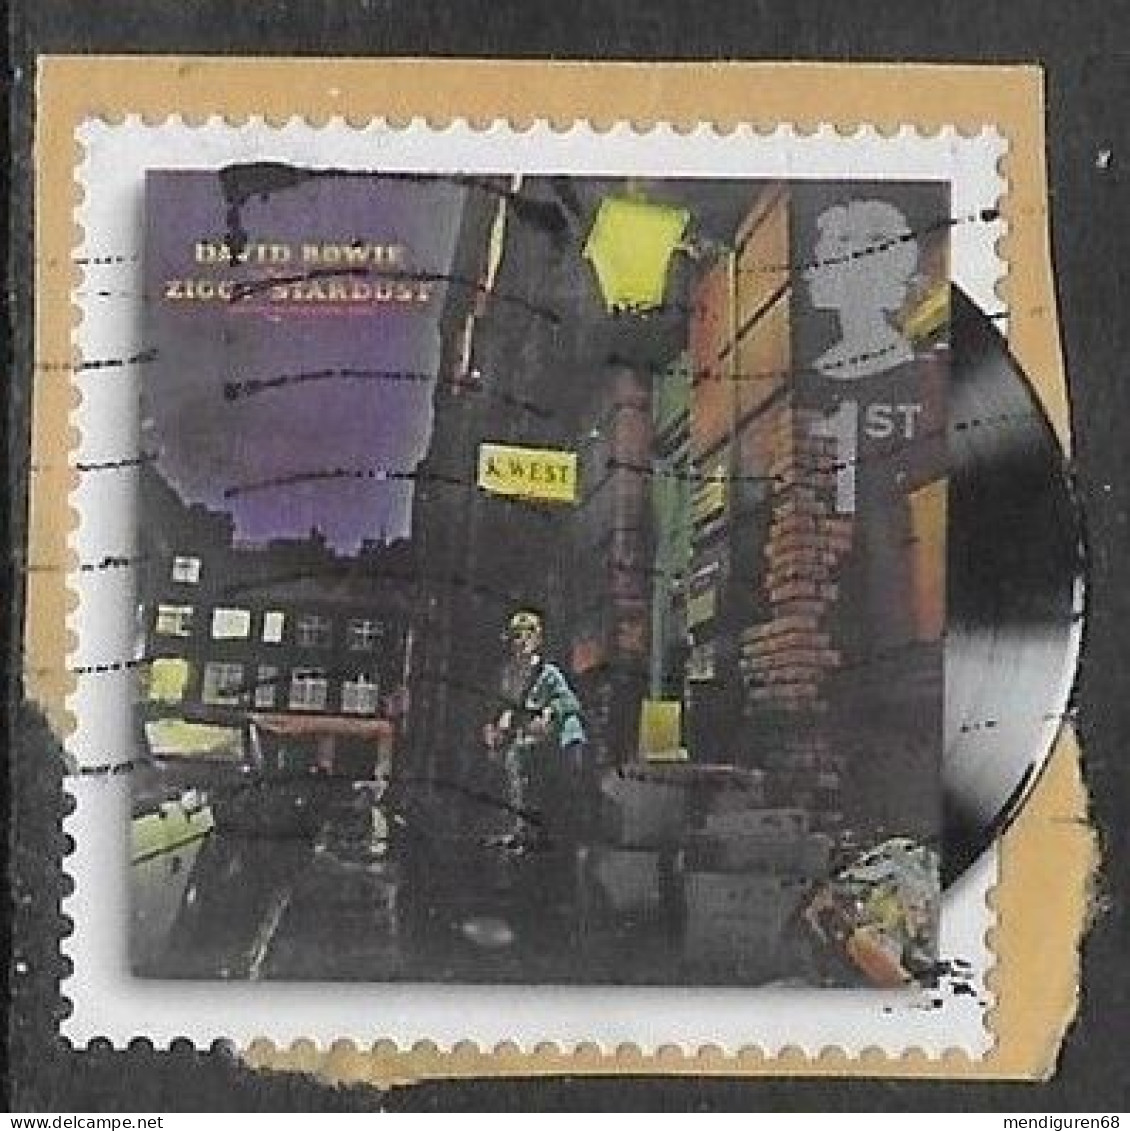 GROSBRITANNIEN GRANDE BRETAGNE GB 2010 CLASSIC ALBUM COVERS S/A:DAVID BOWIE USED ONPAPER SG 3008 SC 2743 MI 2850 YT 3234 - Used Stamps